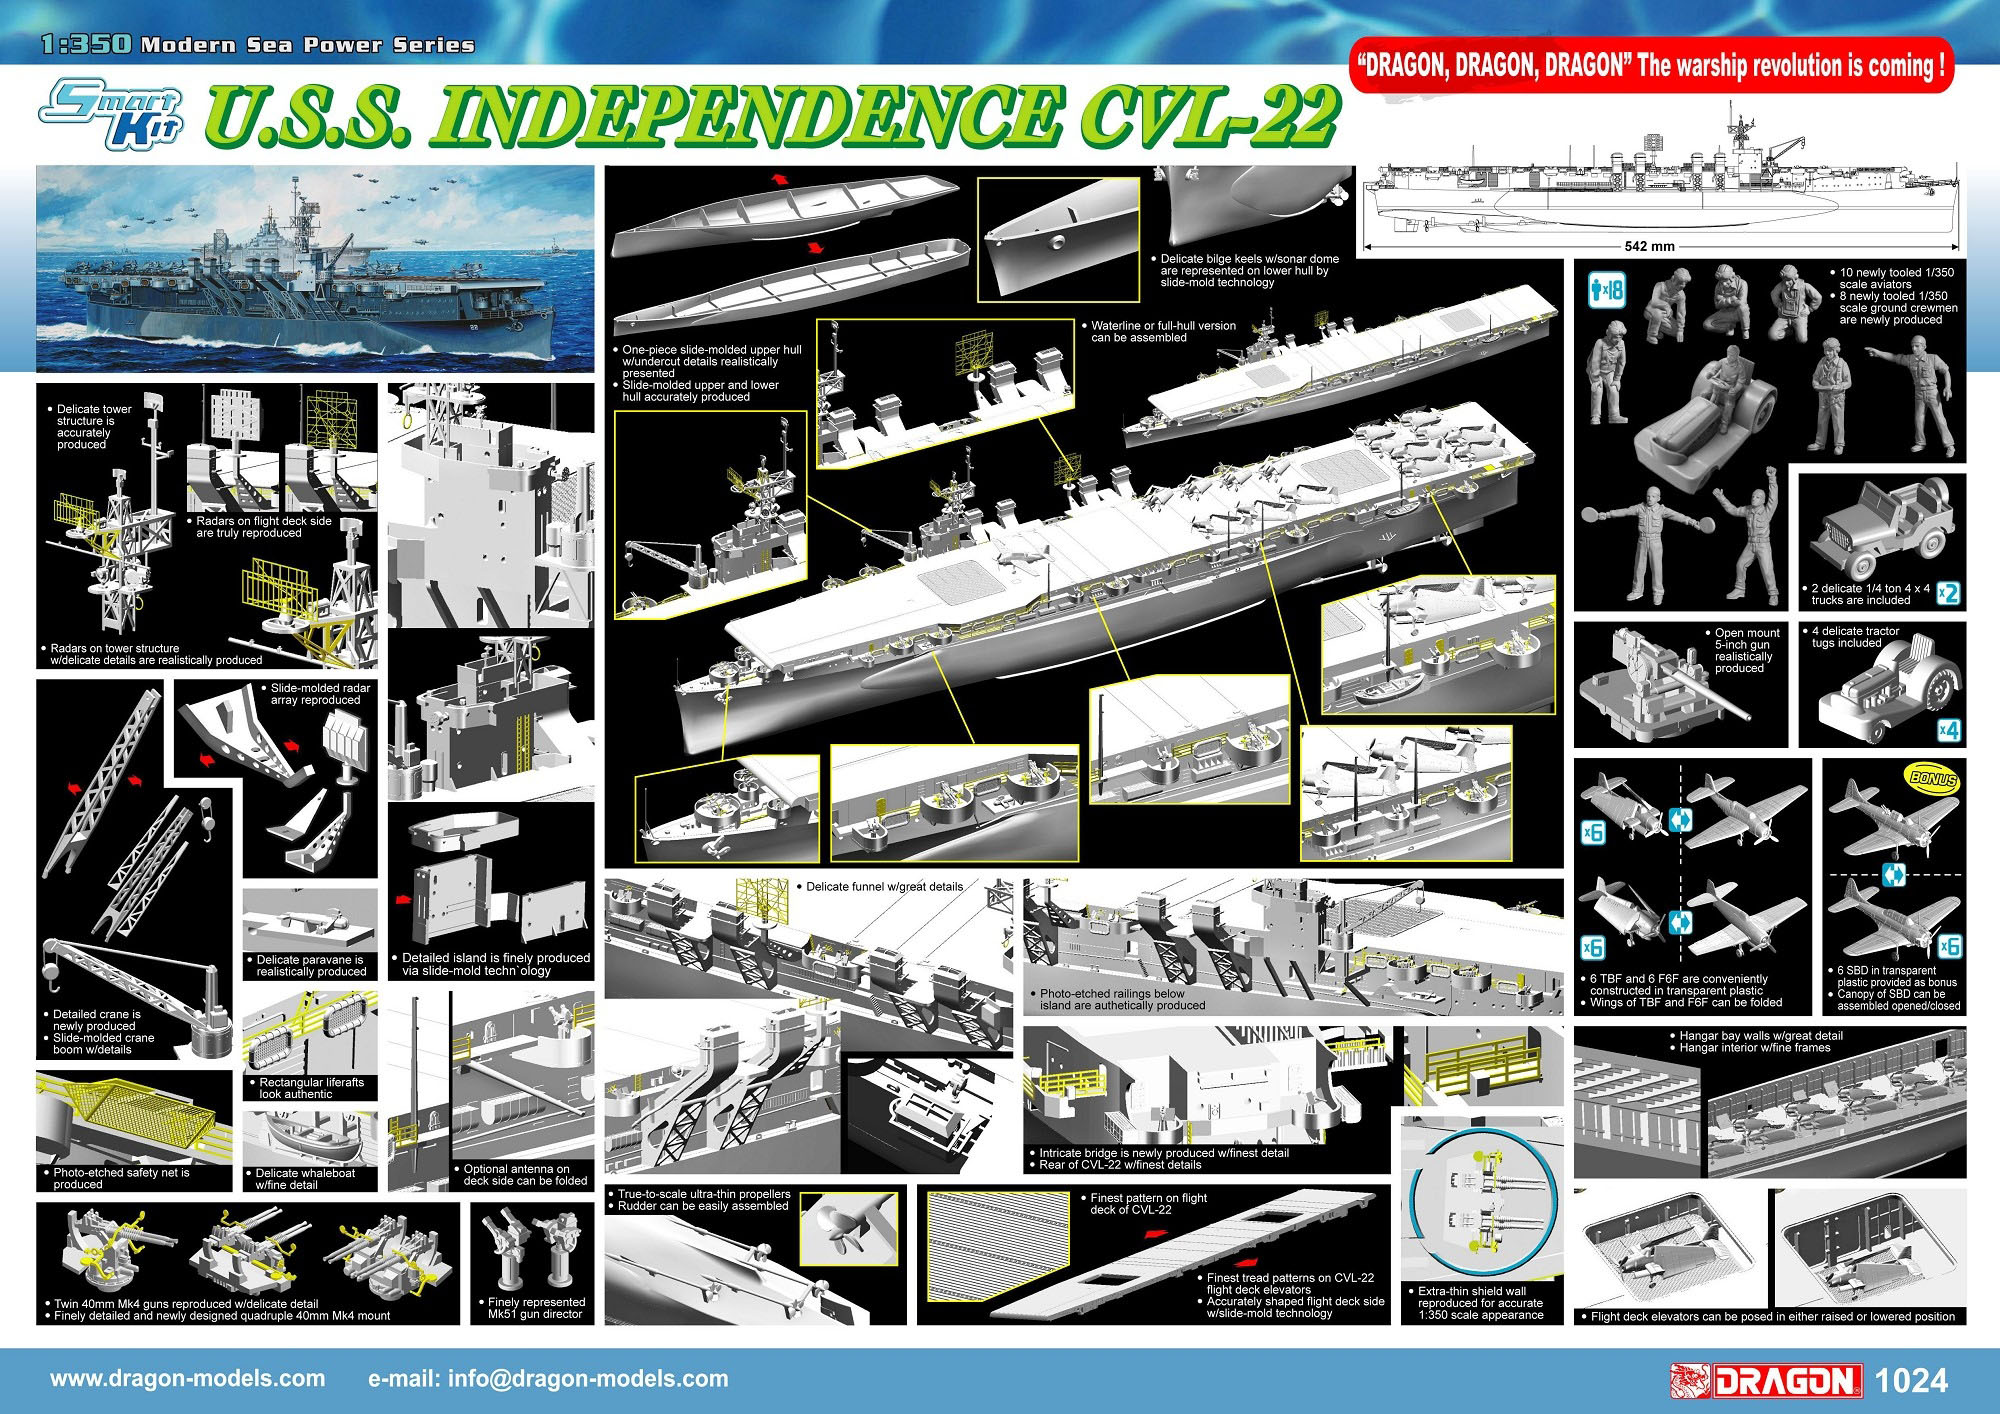 1/350 WW.II アメリカ海軍 航空母艦 インディペンデンス CVL-22